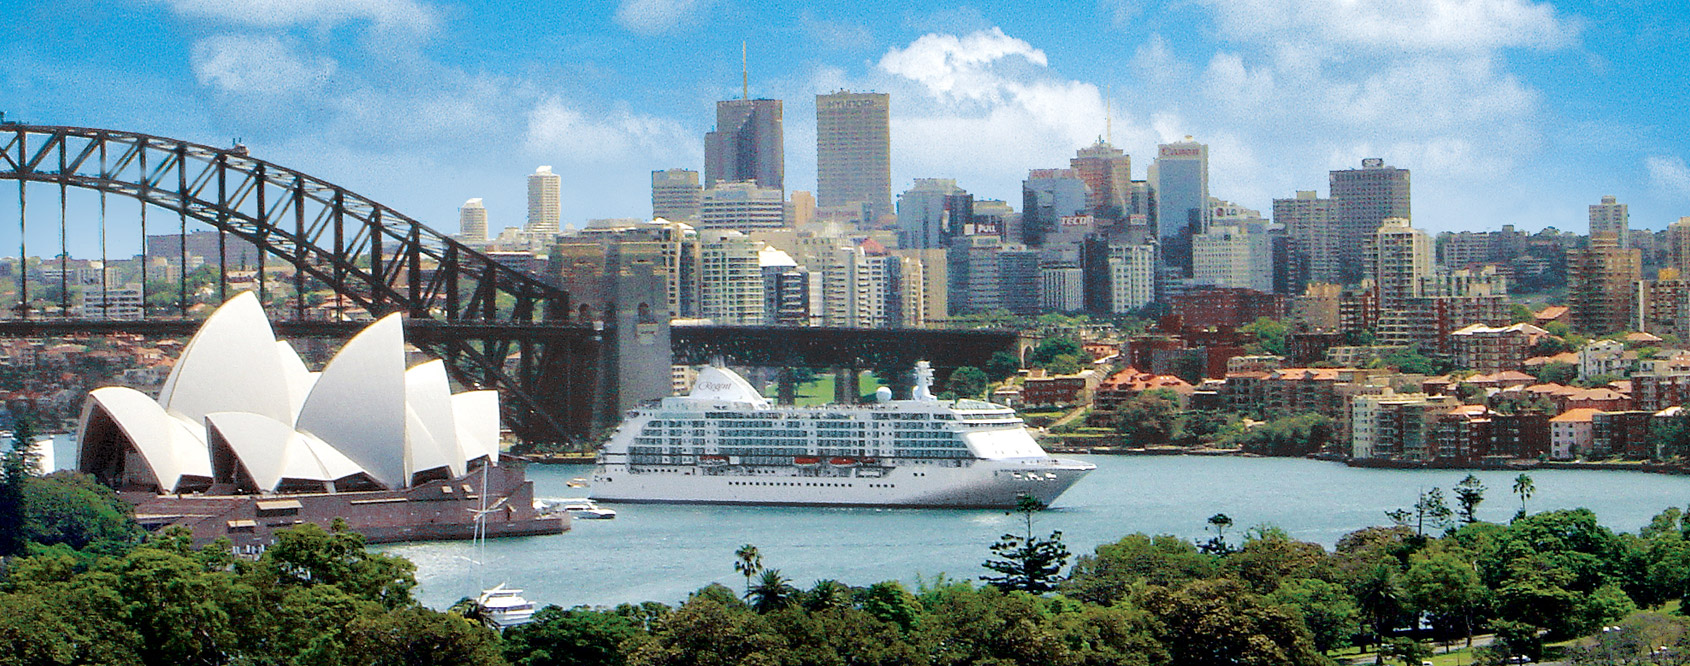 Regent Seven Seas Cruises Main Image